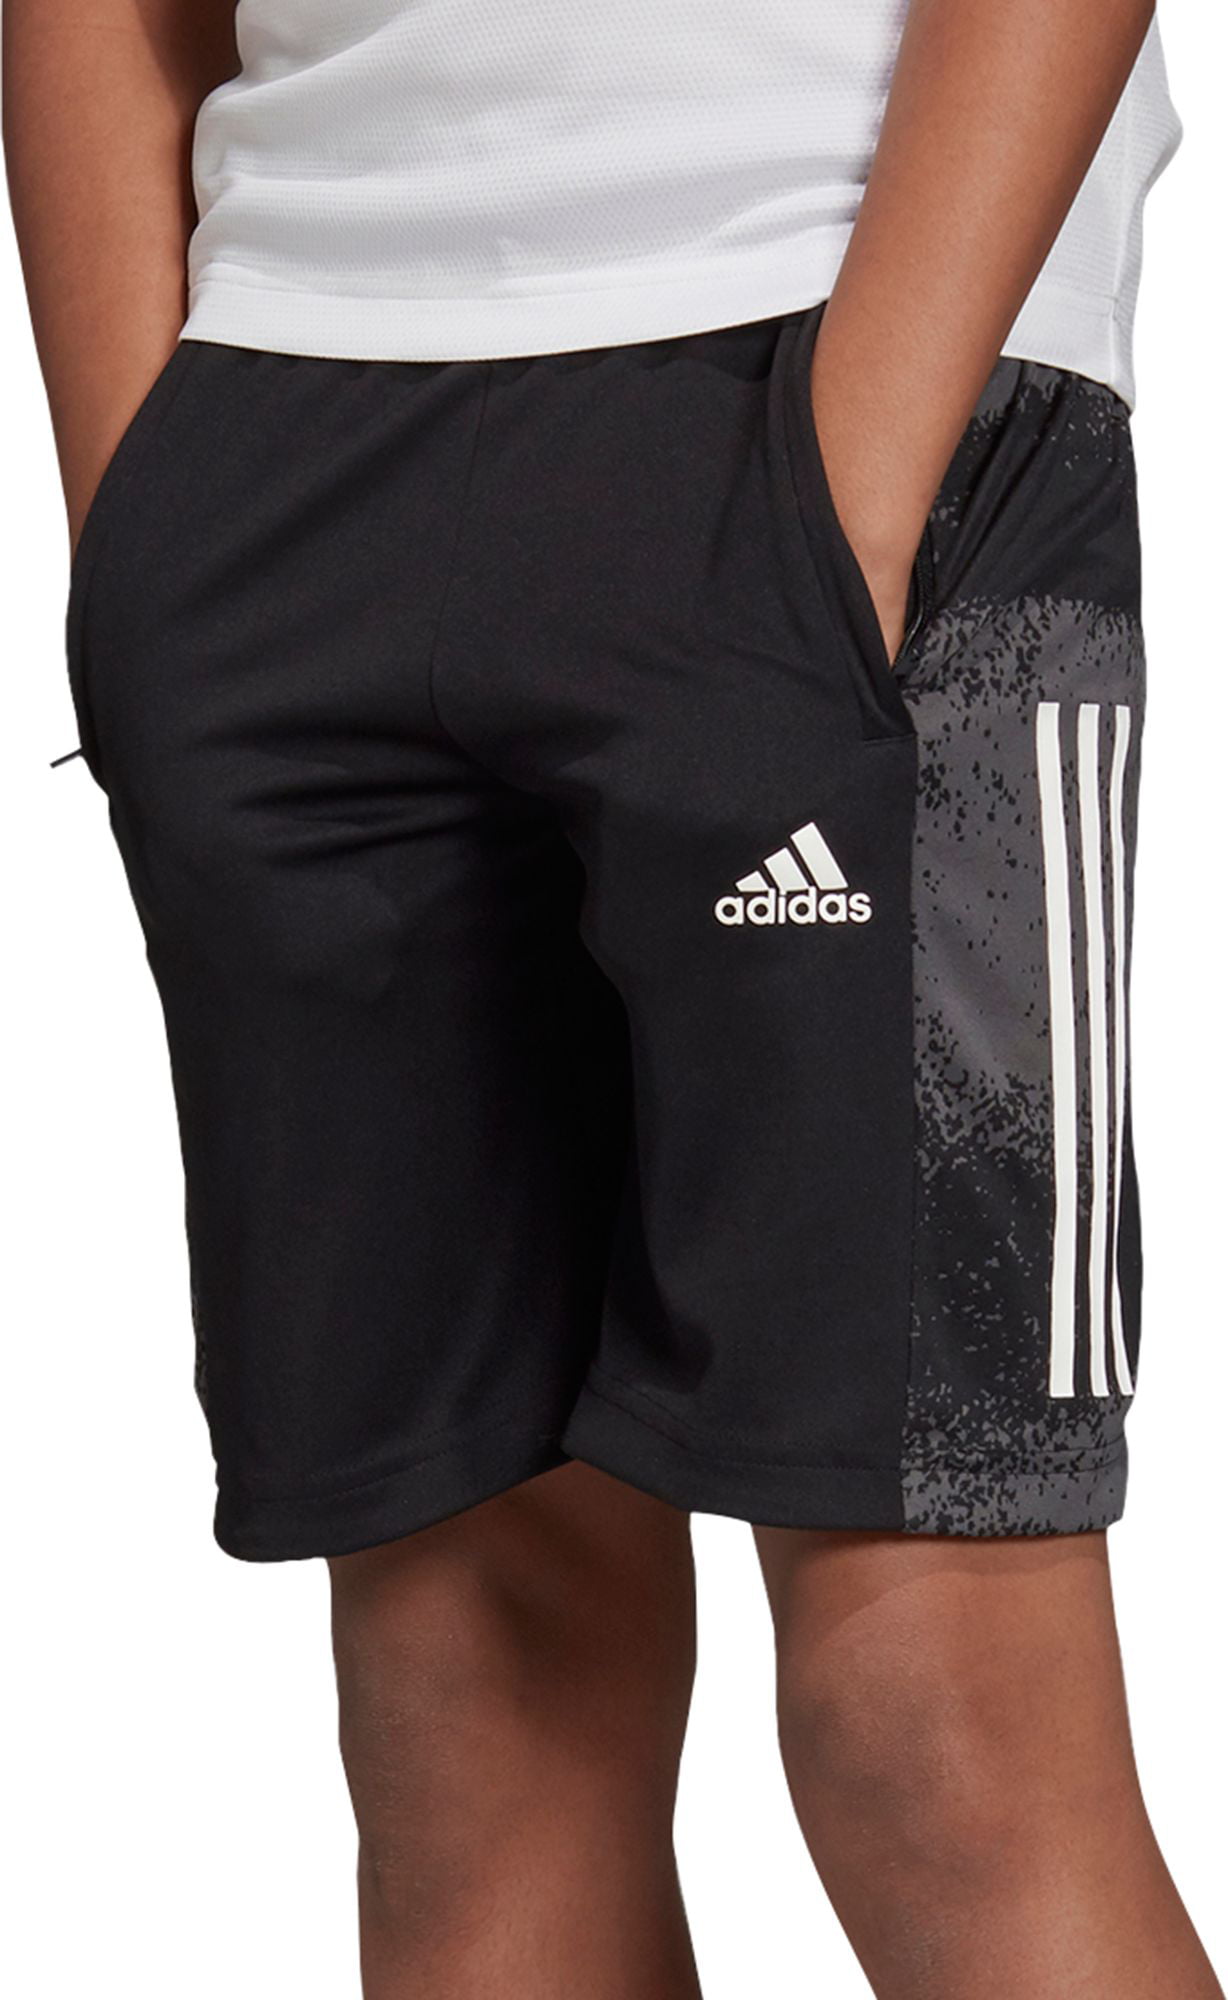 adidas Boys' Training Shorts - Walmart.com - Walmart.com